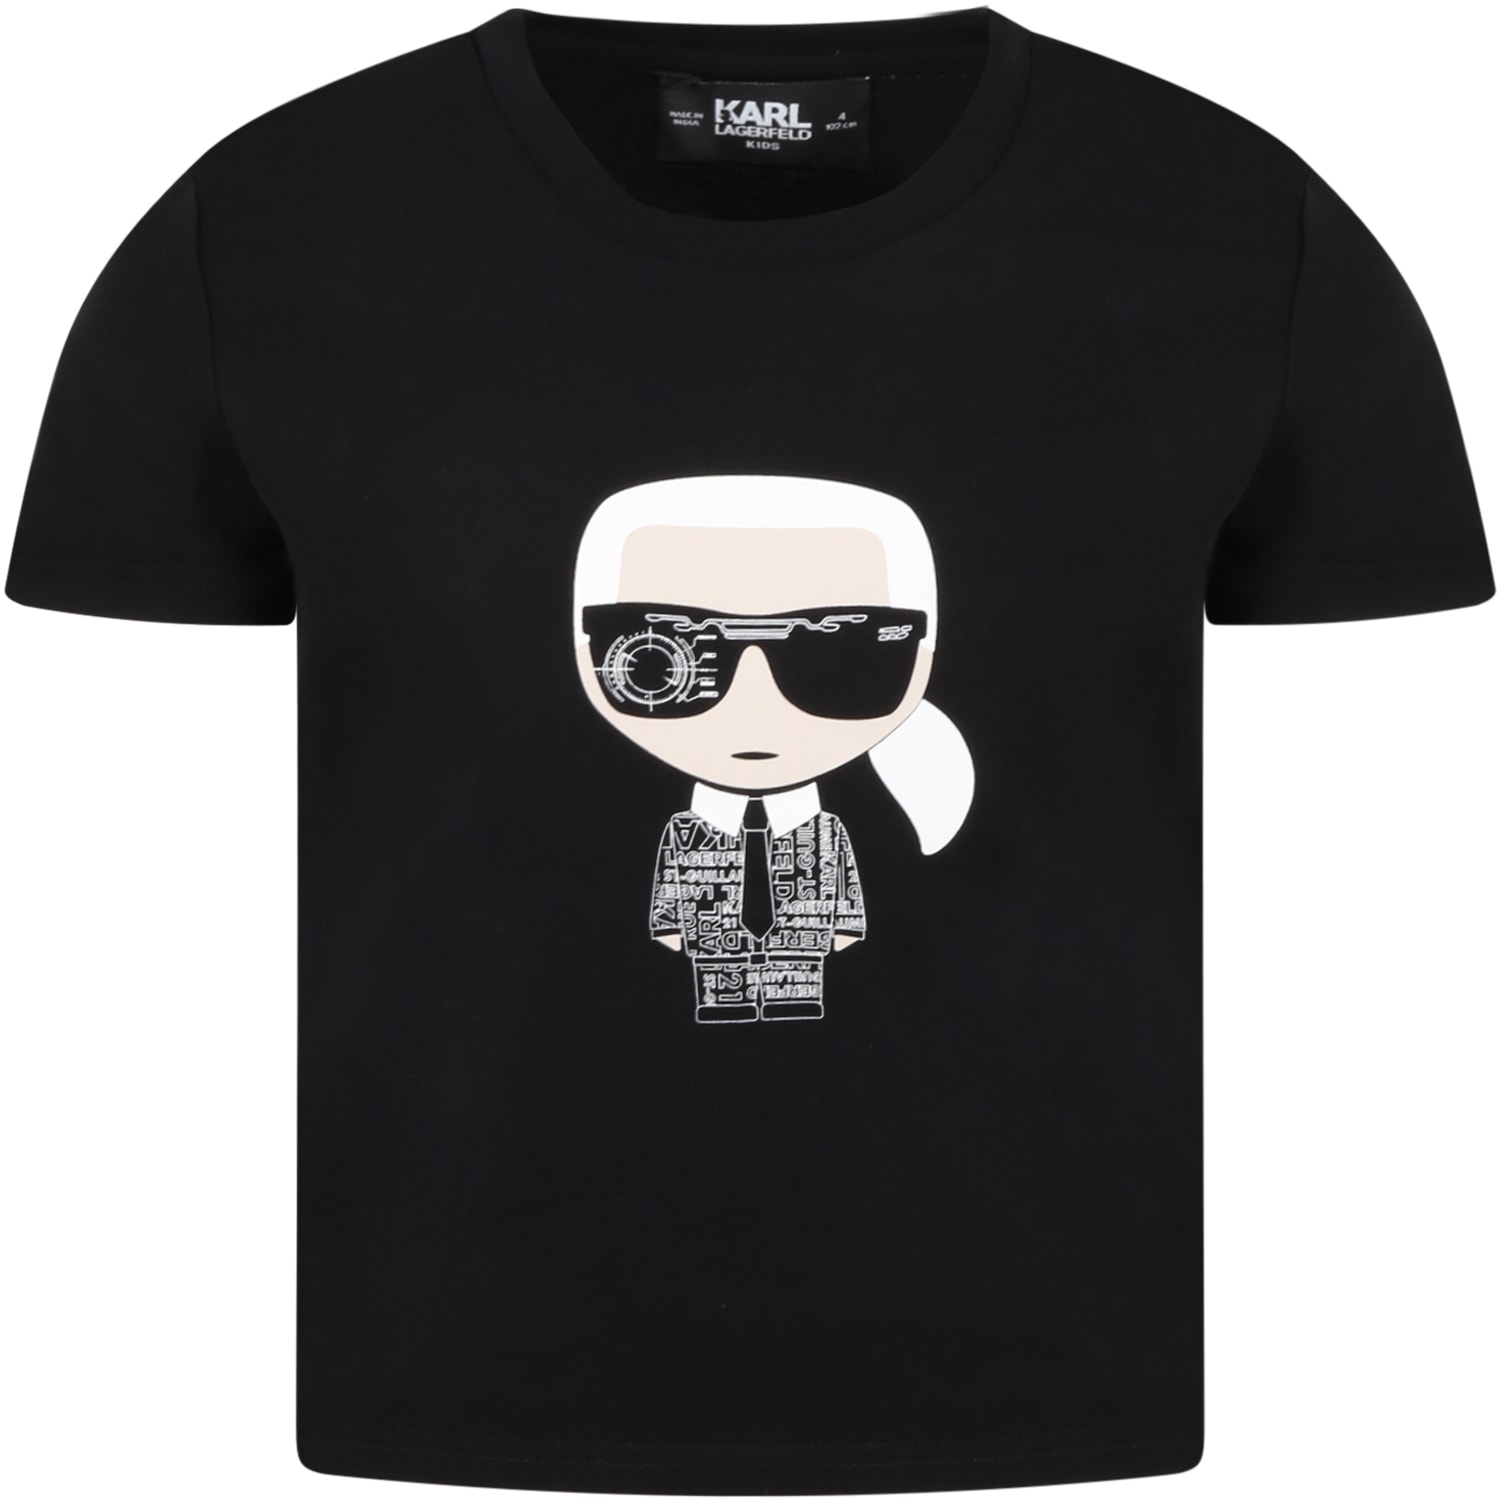 Karl Lagerfeld Kids Black T-shirrt For Boy With Karl